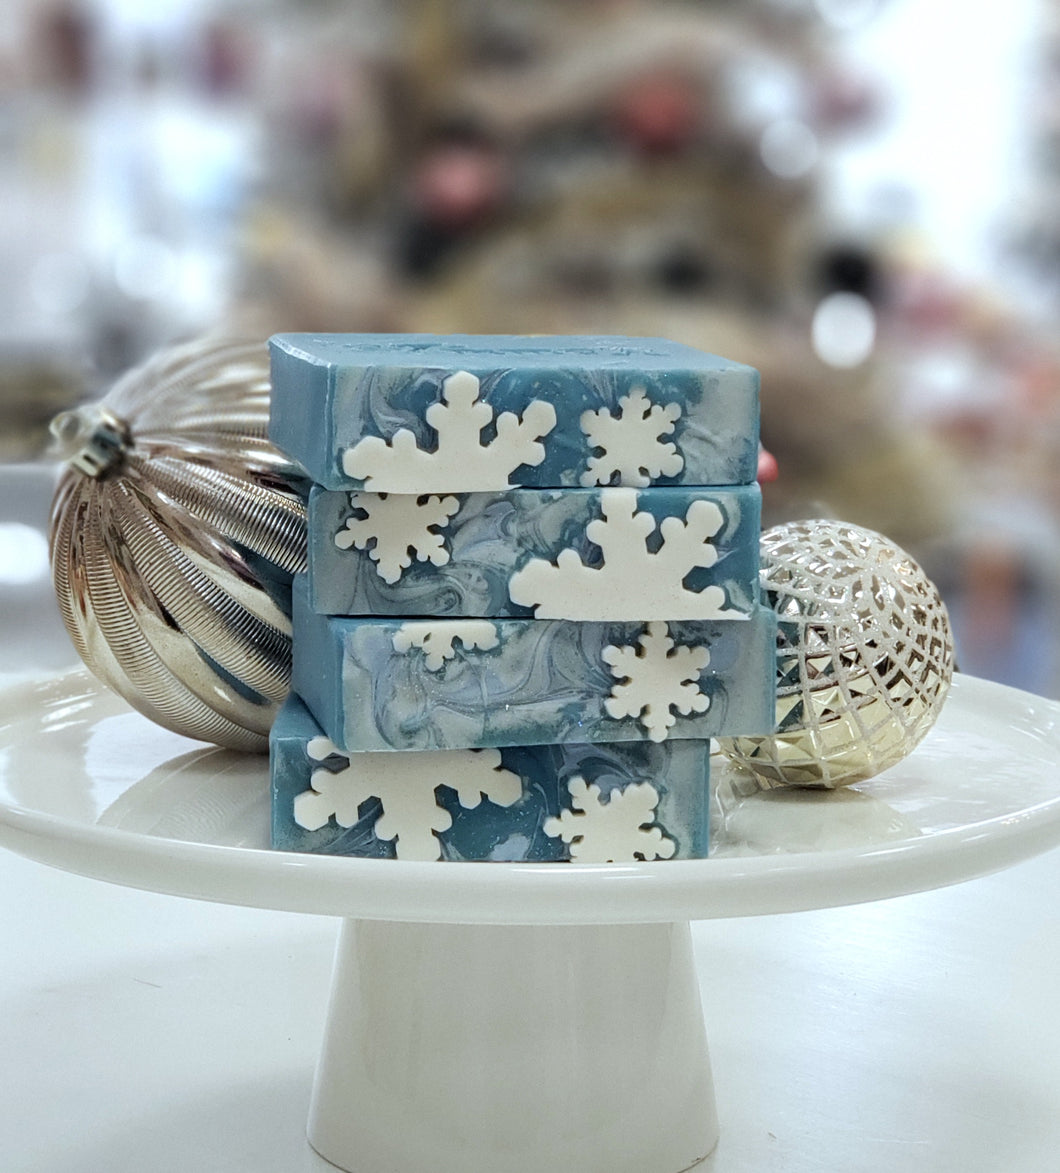 Winter Wonderland Soap